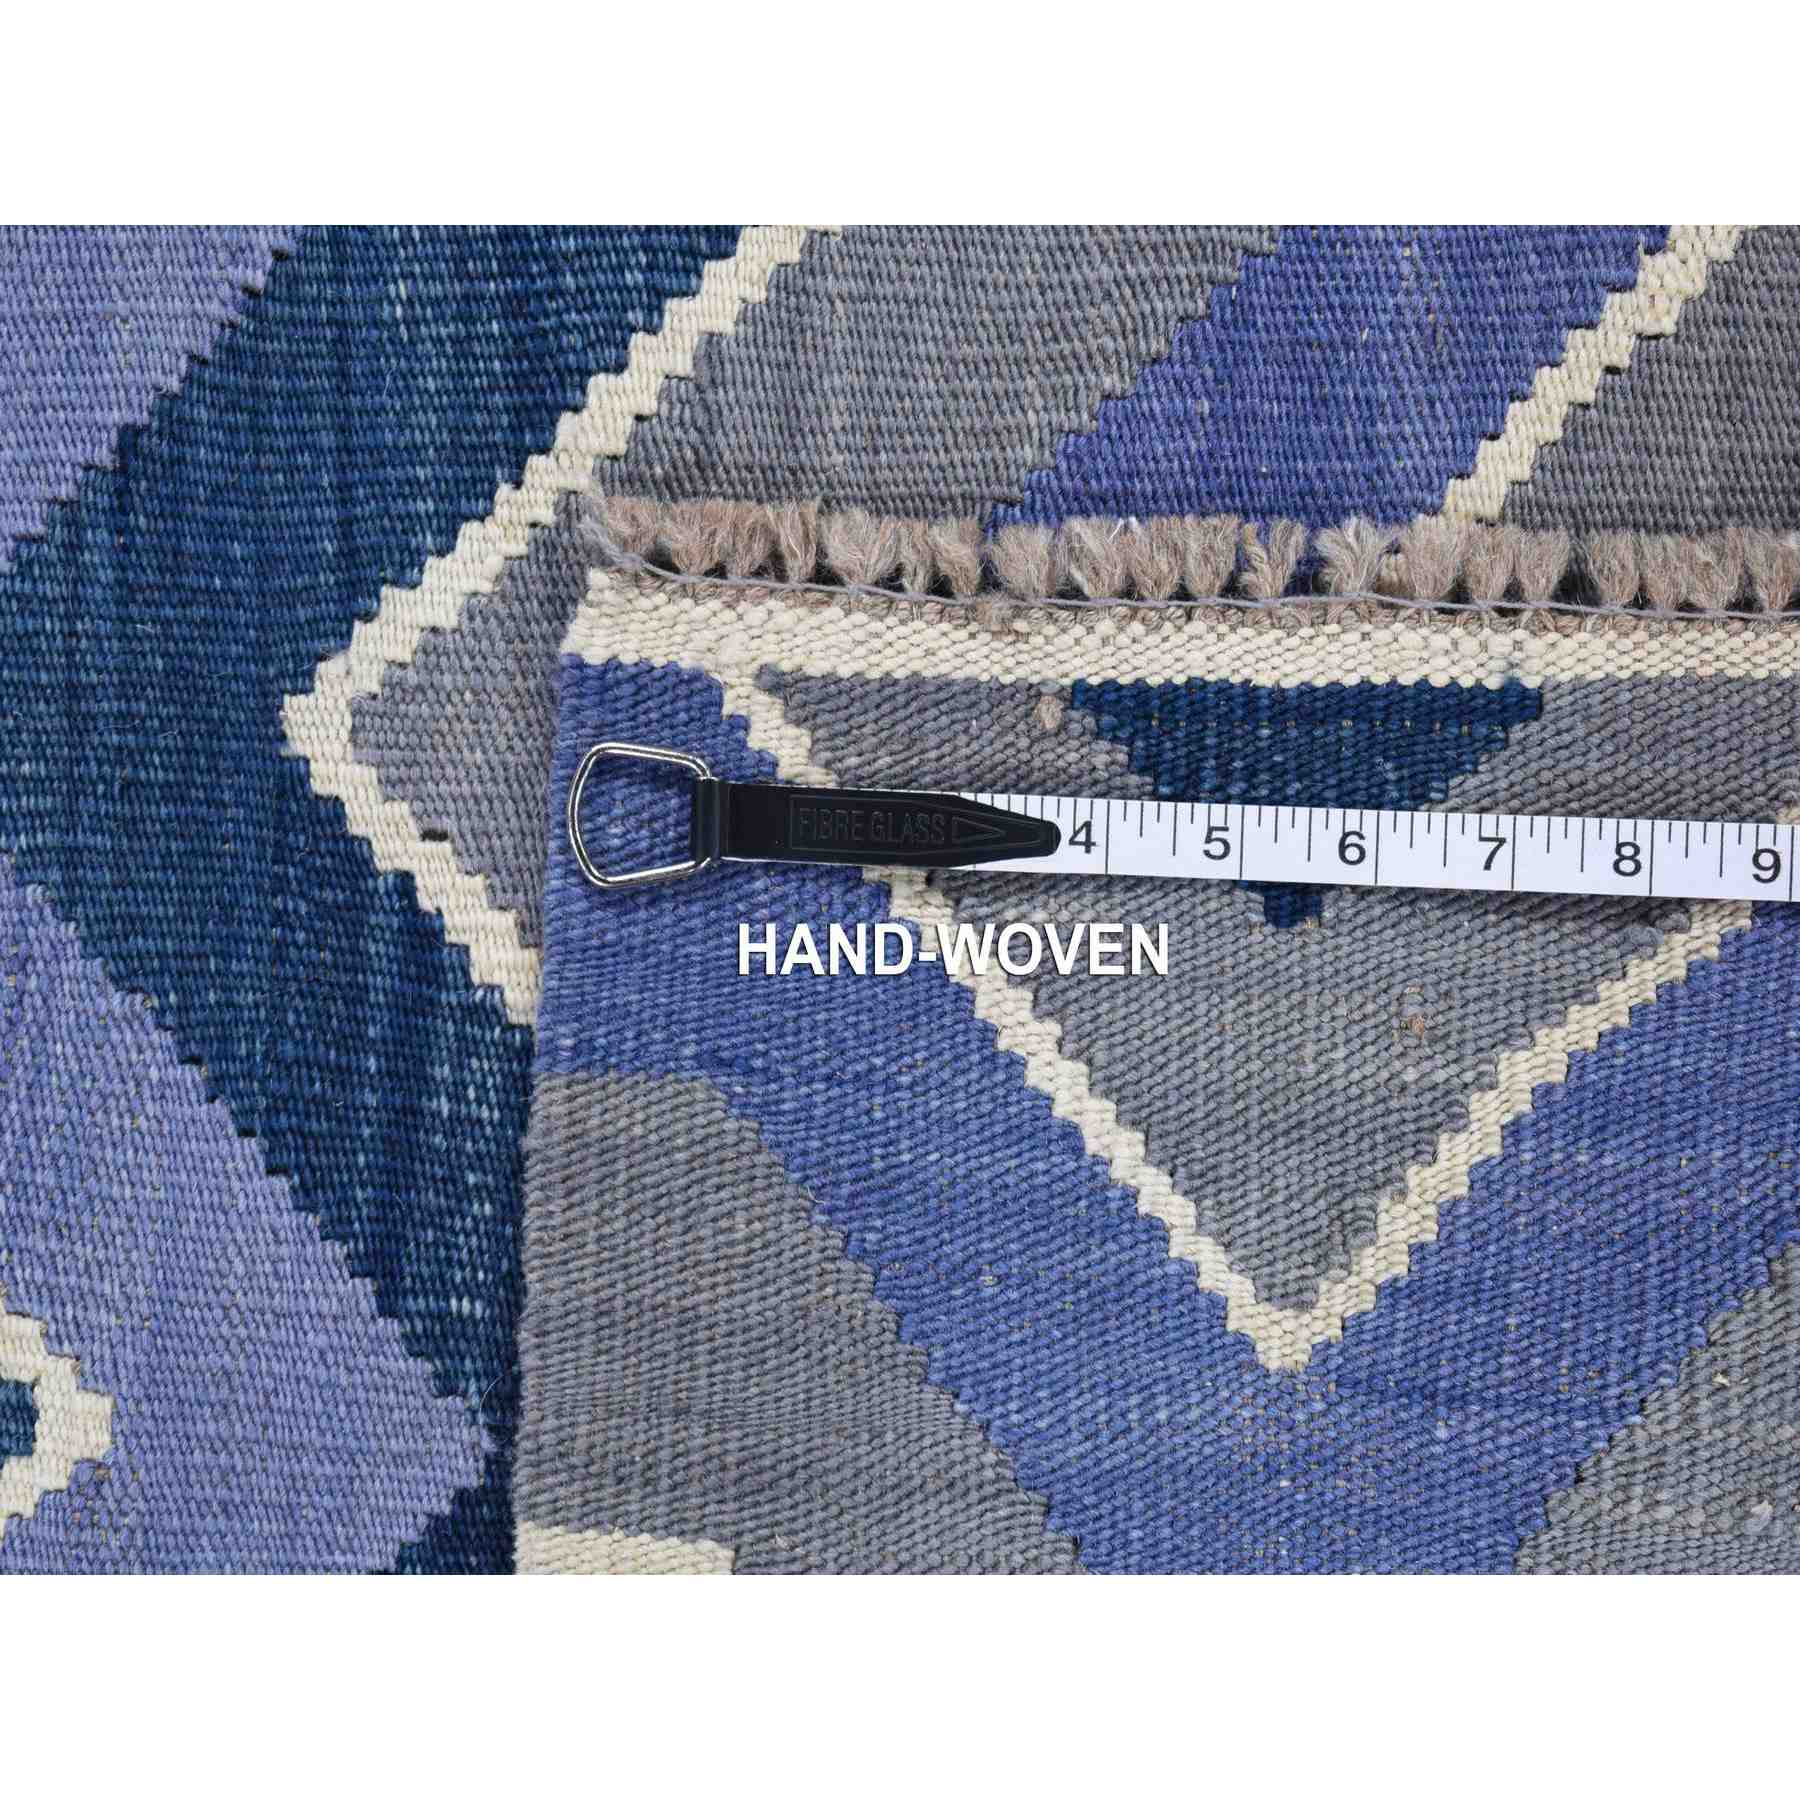 Flat-Weave-Hand-Woven-Rug-402765